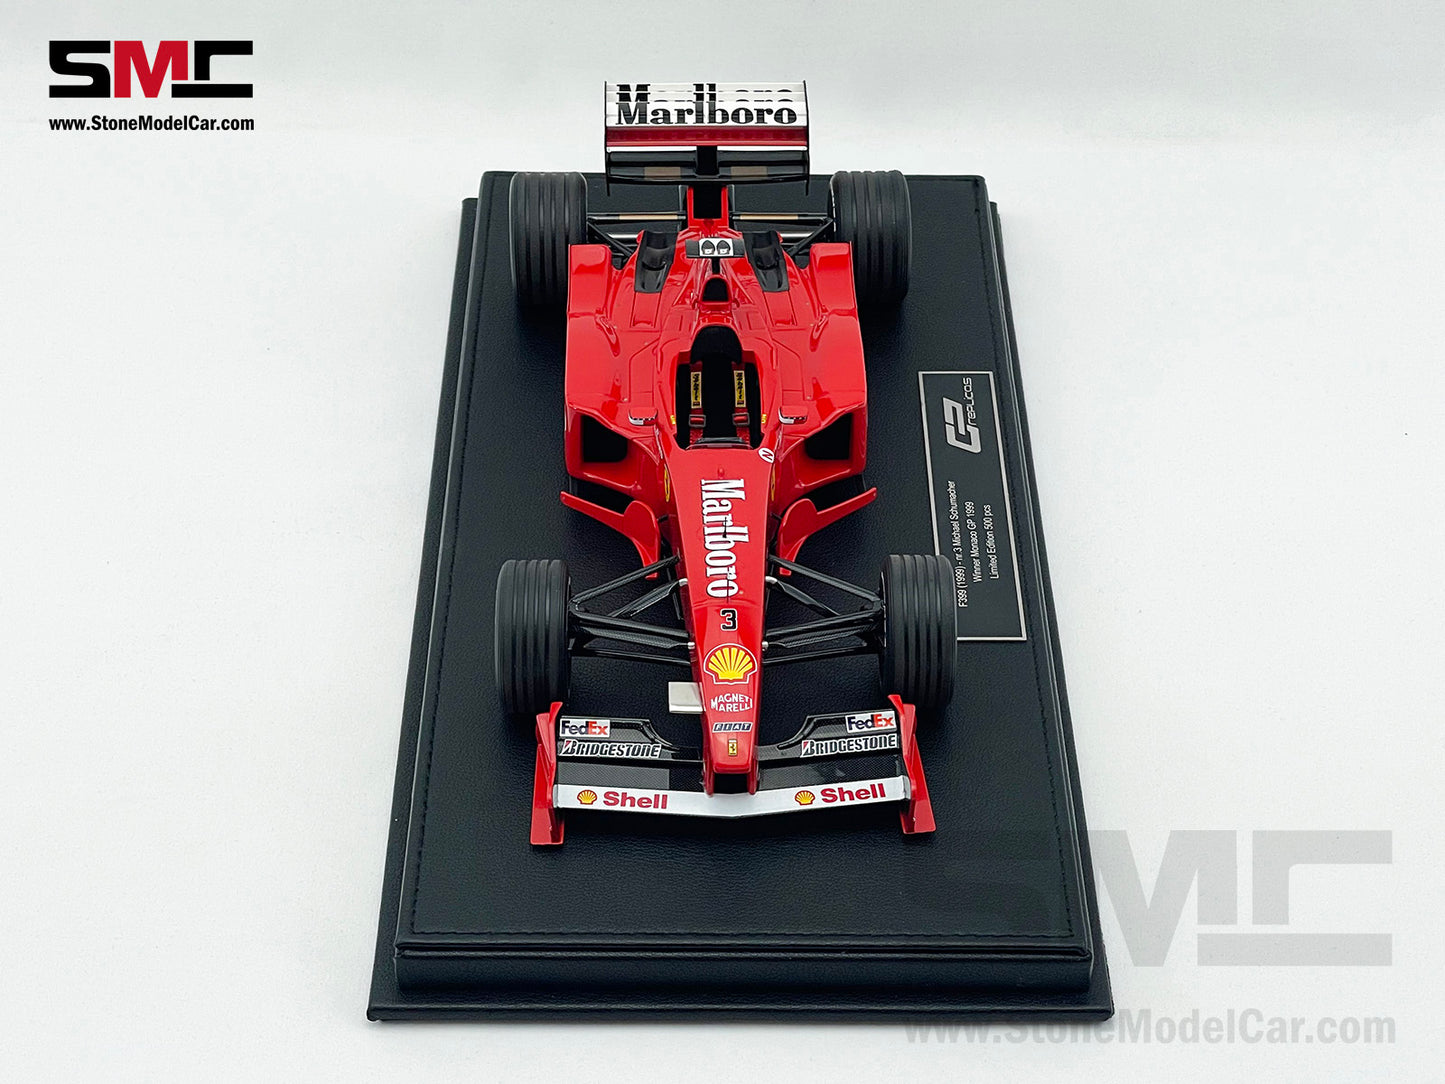 Ferrari F1 F399 #3 Michael Schumacher Monaco GP Winner 1999 1:18 GP REPLICAS with Decal